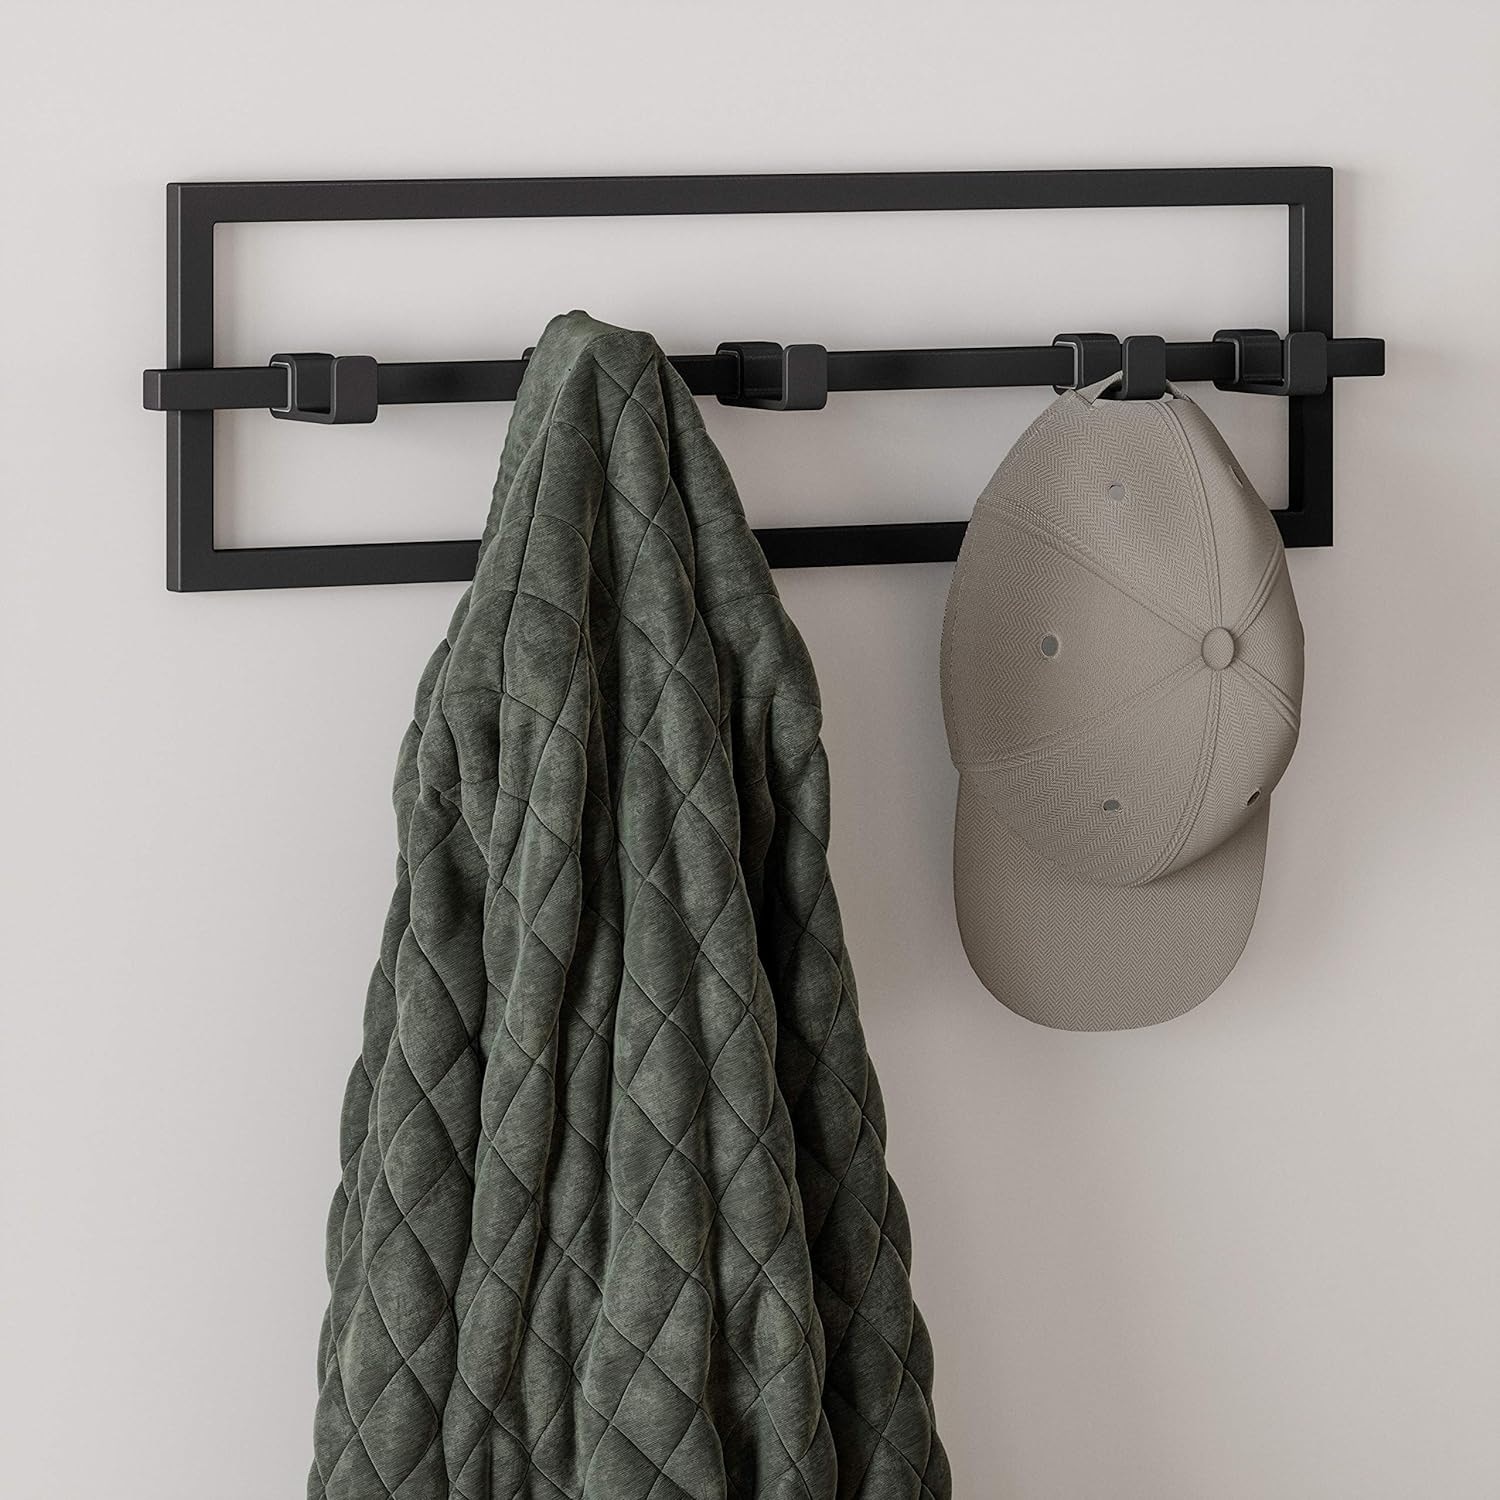 Wall Mounted Modern, Sleek, Space-Saving Hanger with Retractable Hooks -  Bed Bath & Beyond - 39655826